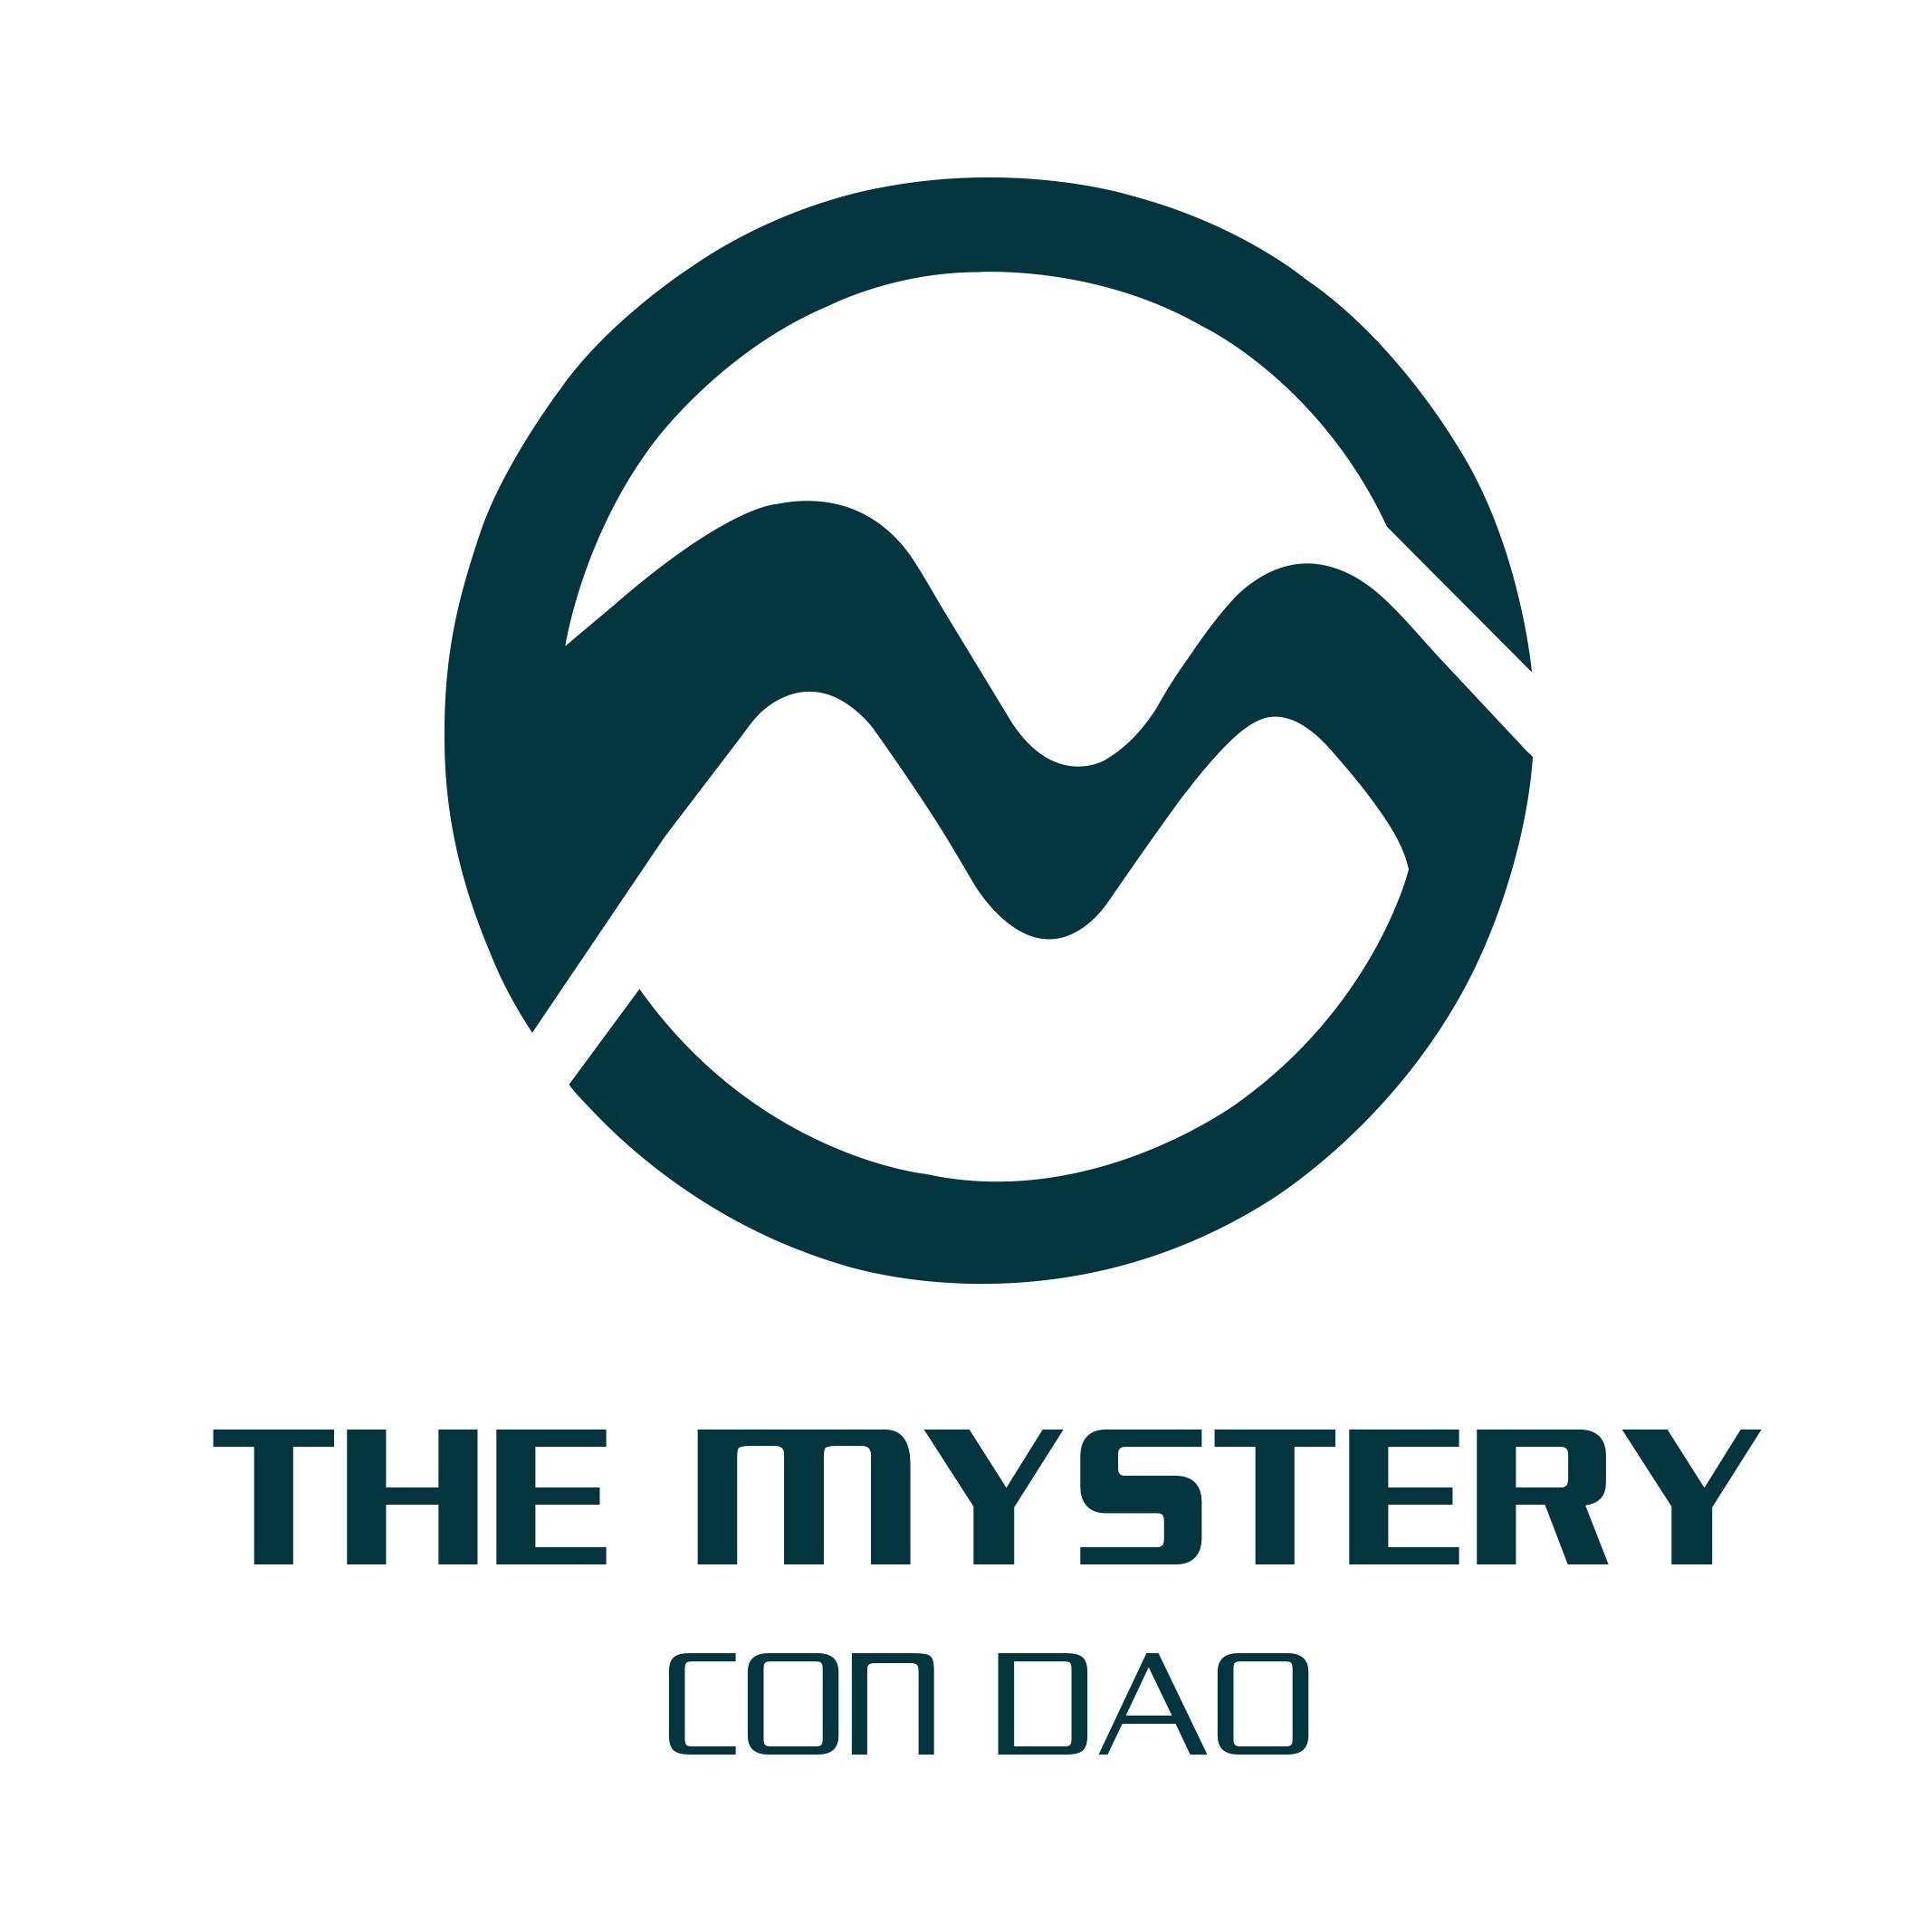 The Mystery Côn Đảo